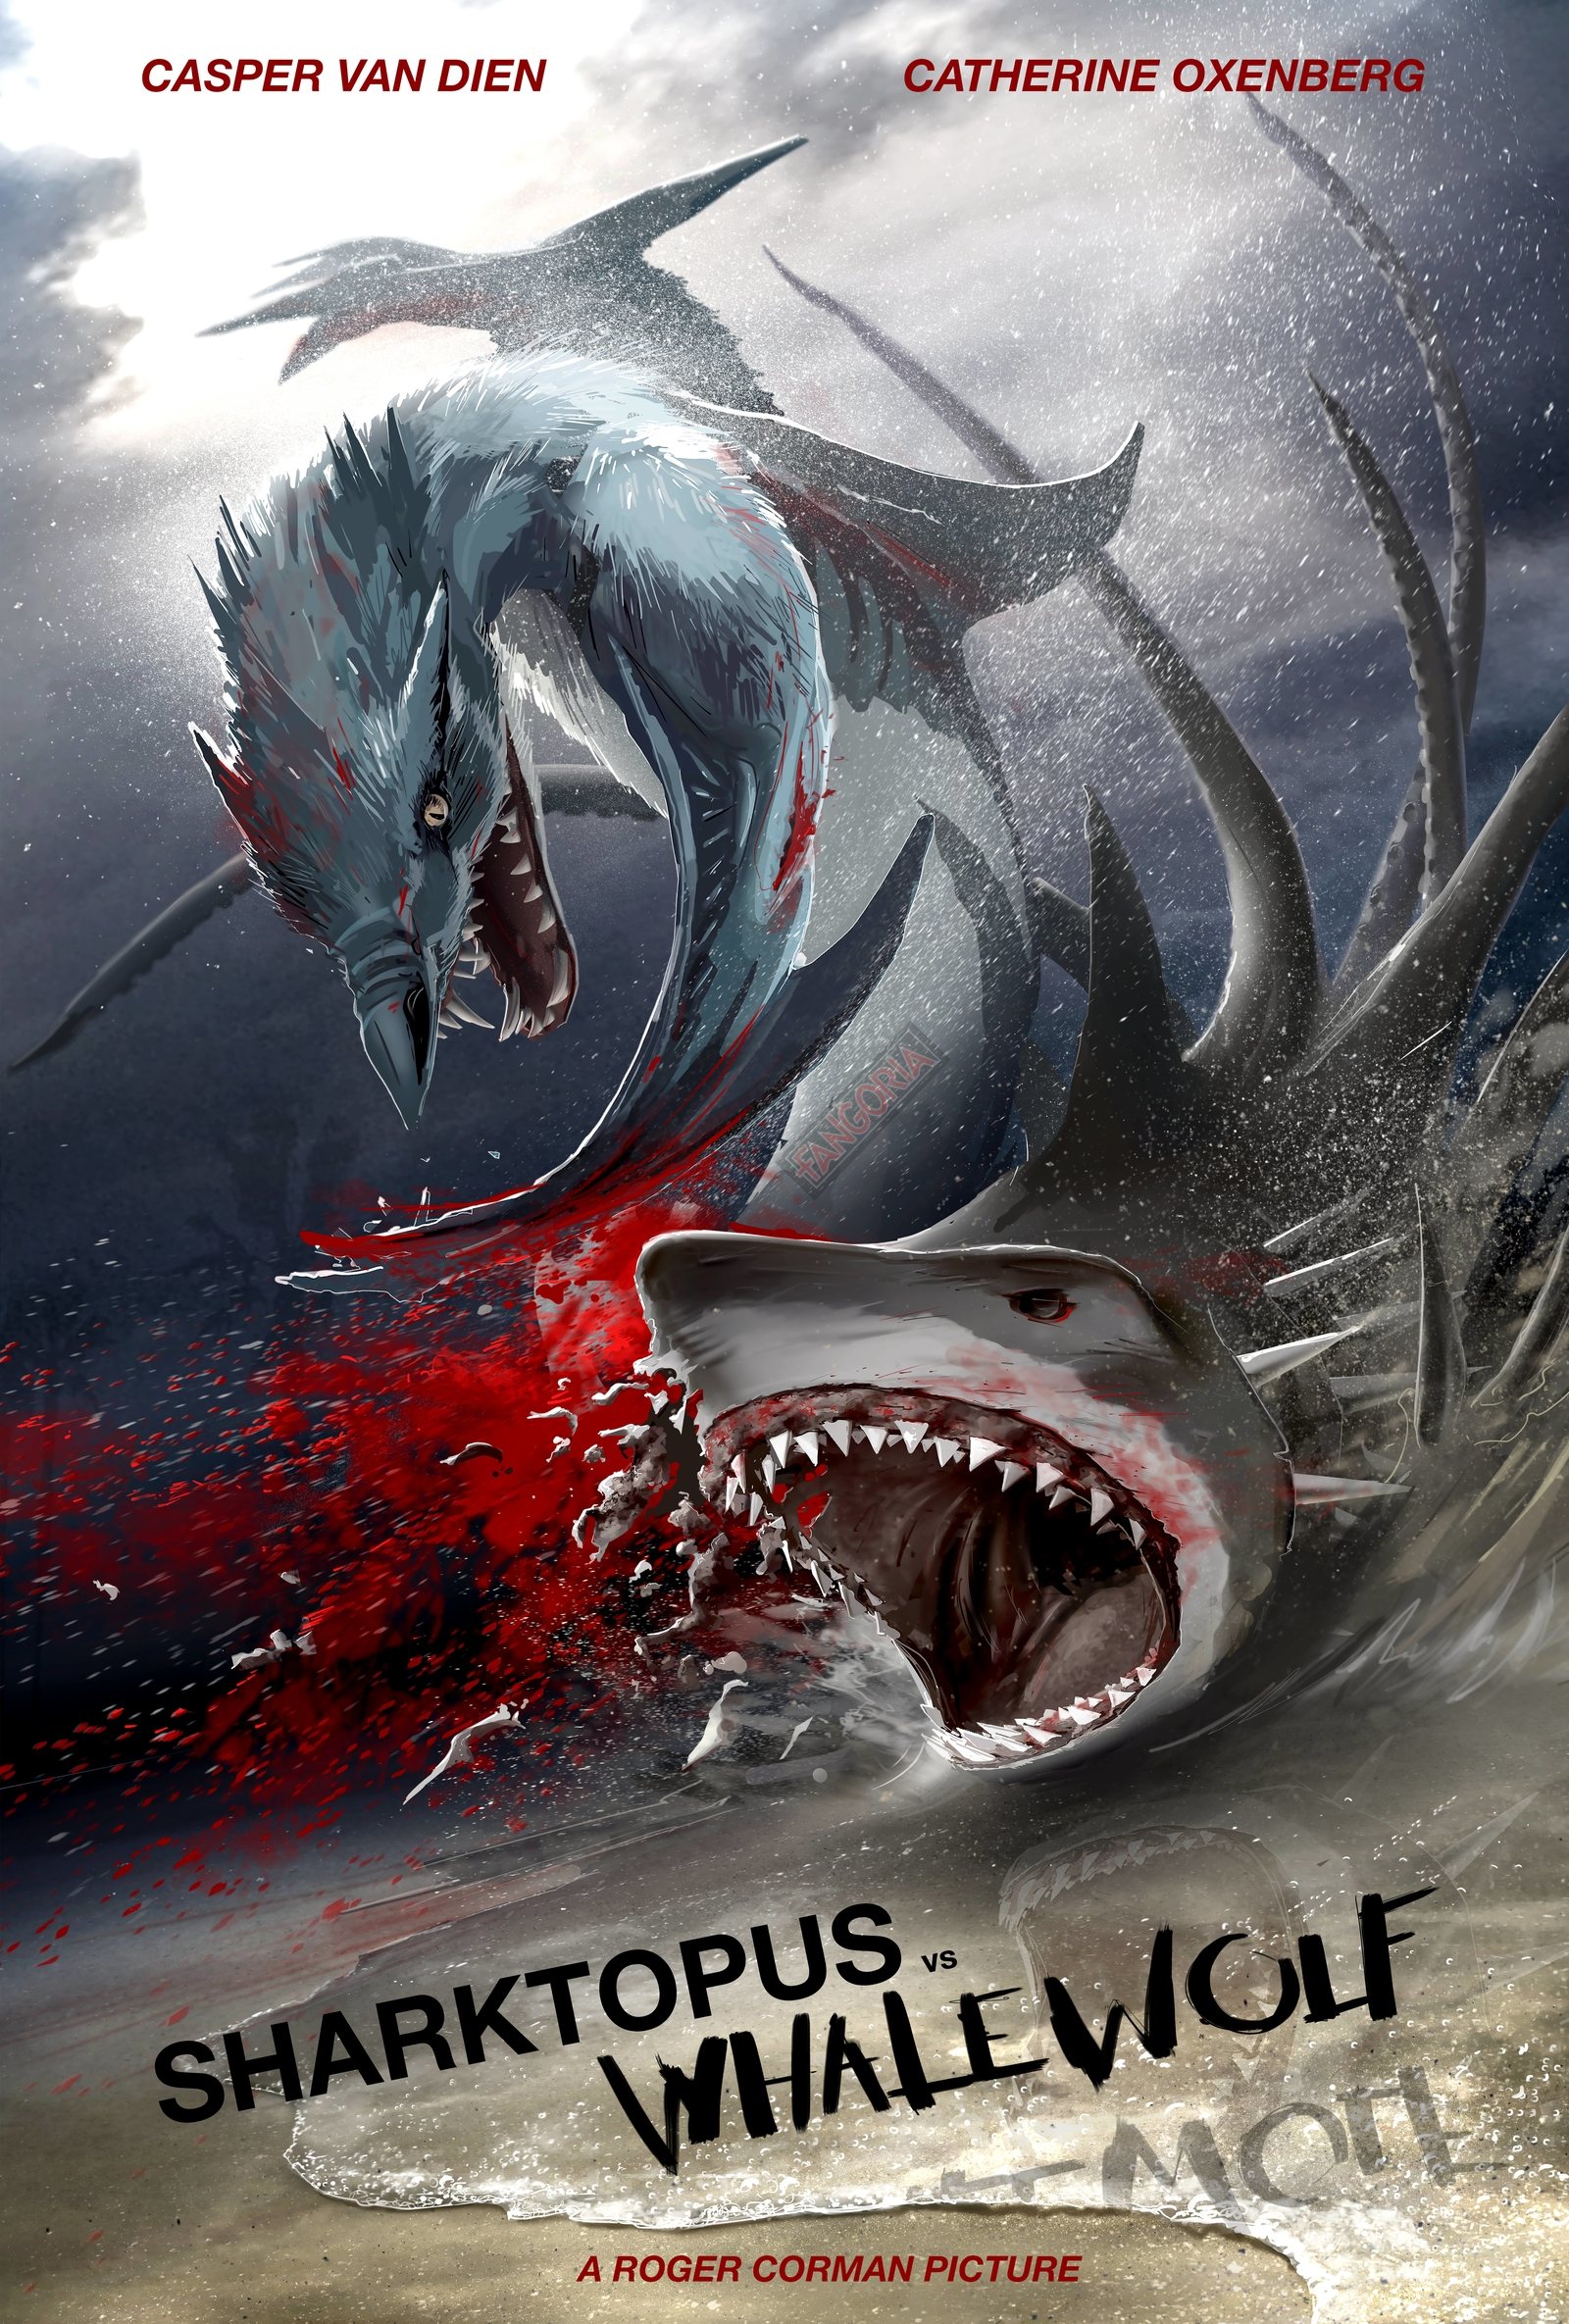 Shacktopus vs Whalewolf (2015) ชาร์กโทปุส ปะทะ เวลวูล์ฟ สงครามอสูรใต้ทะเล Casper Van Dien